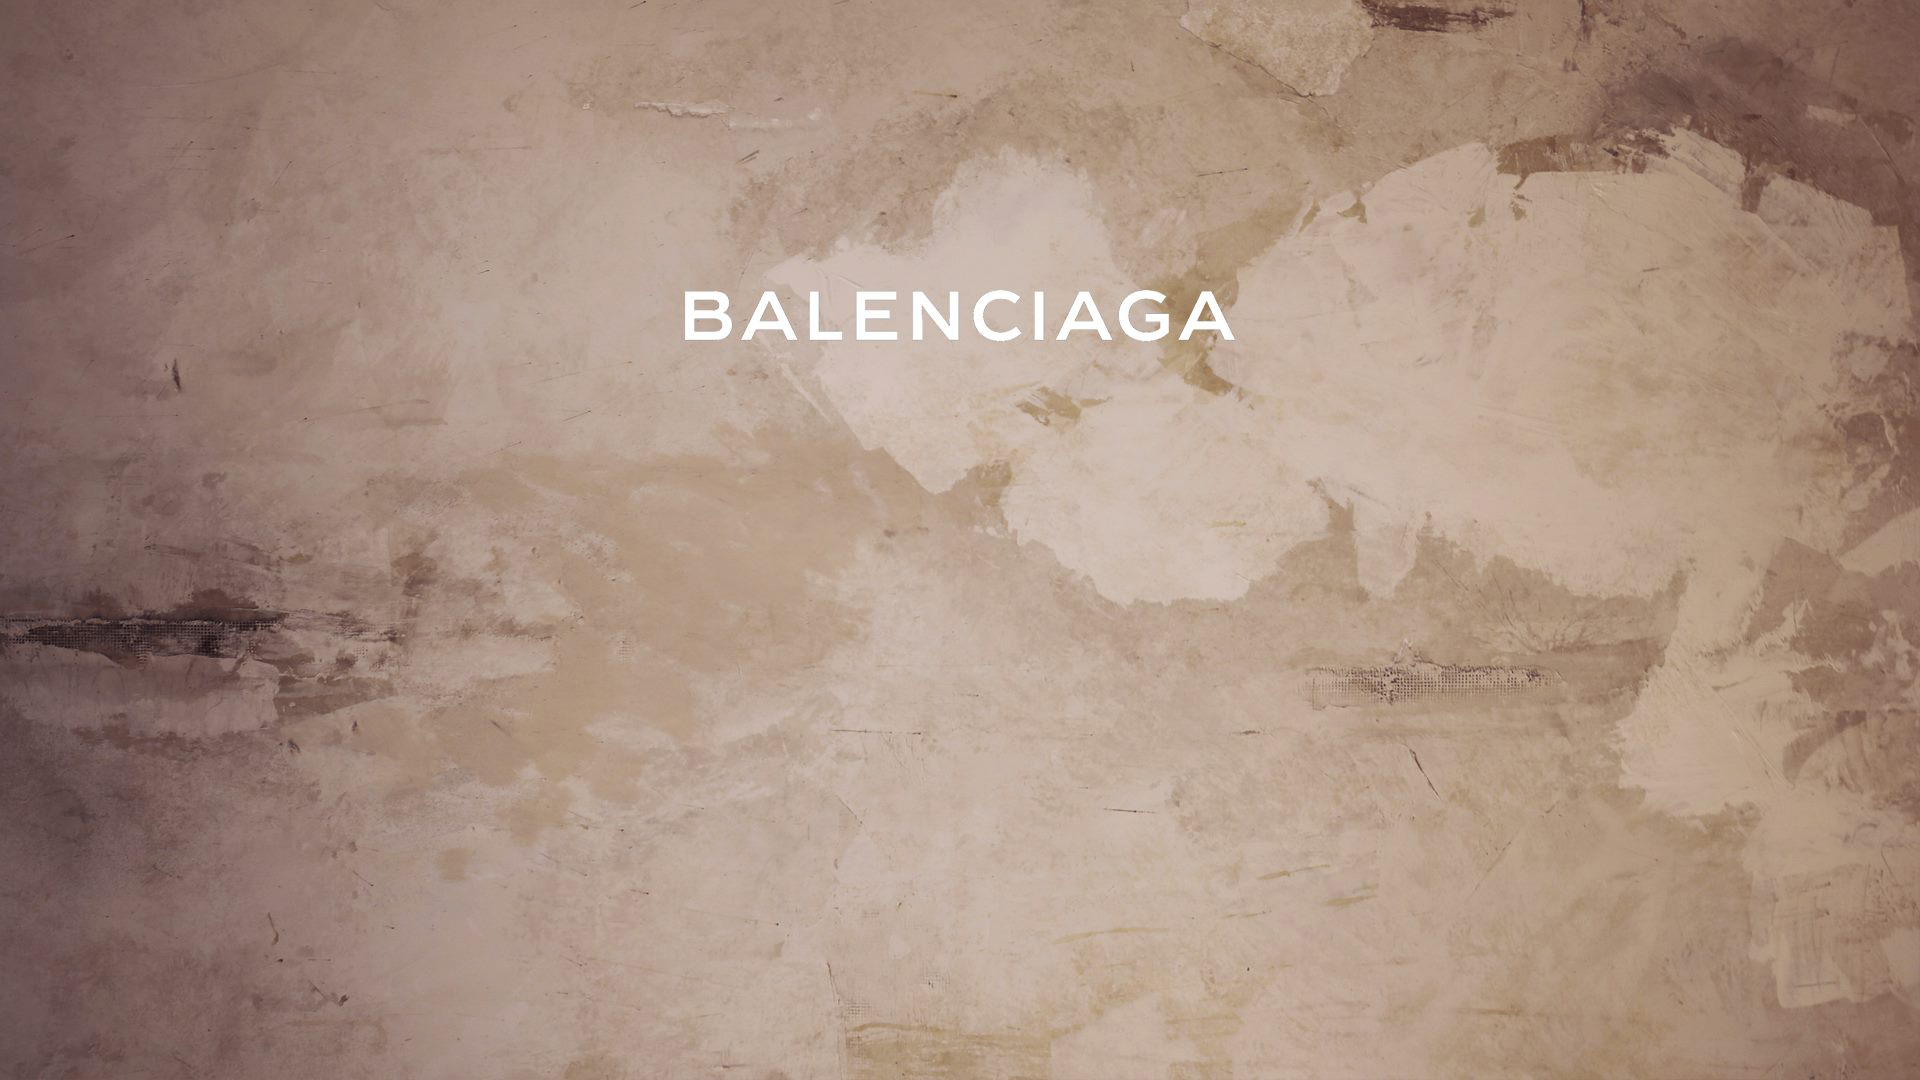 Demna Gvasalia is the new creative director of BalenciagaFashionela